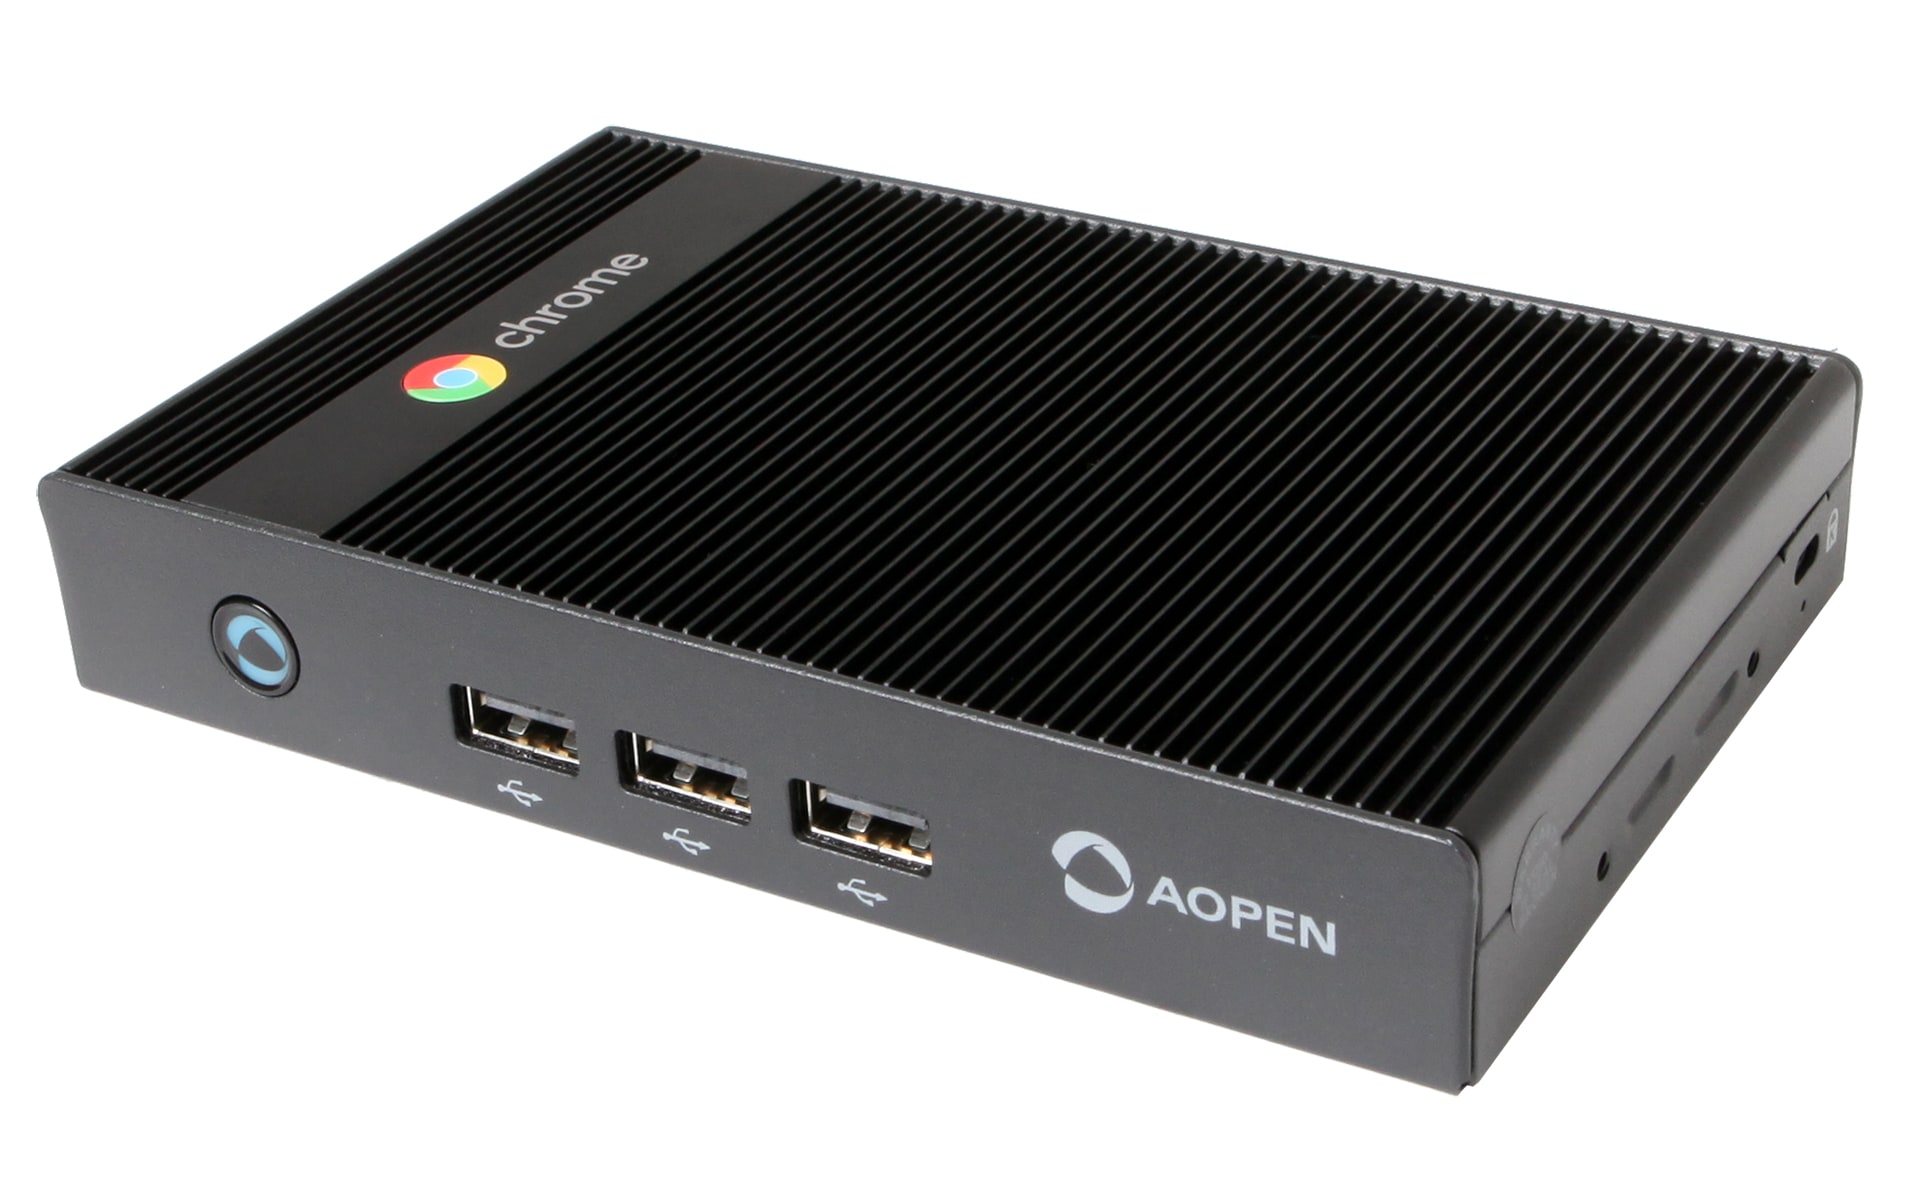 AOPEN Chromebox Mini is Designed for Digital Signage and Kiosks